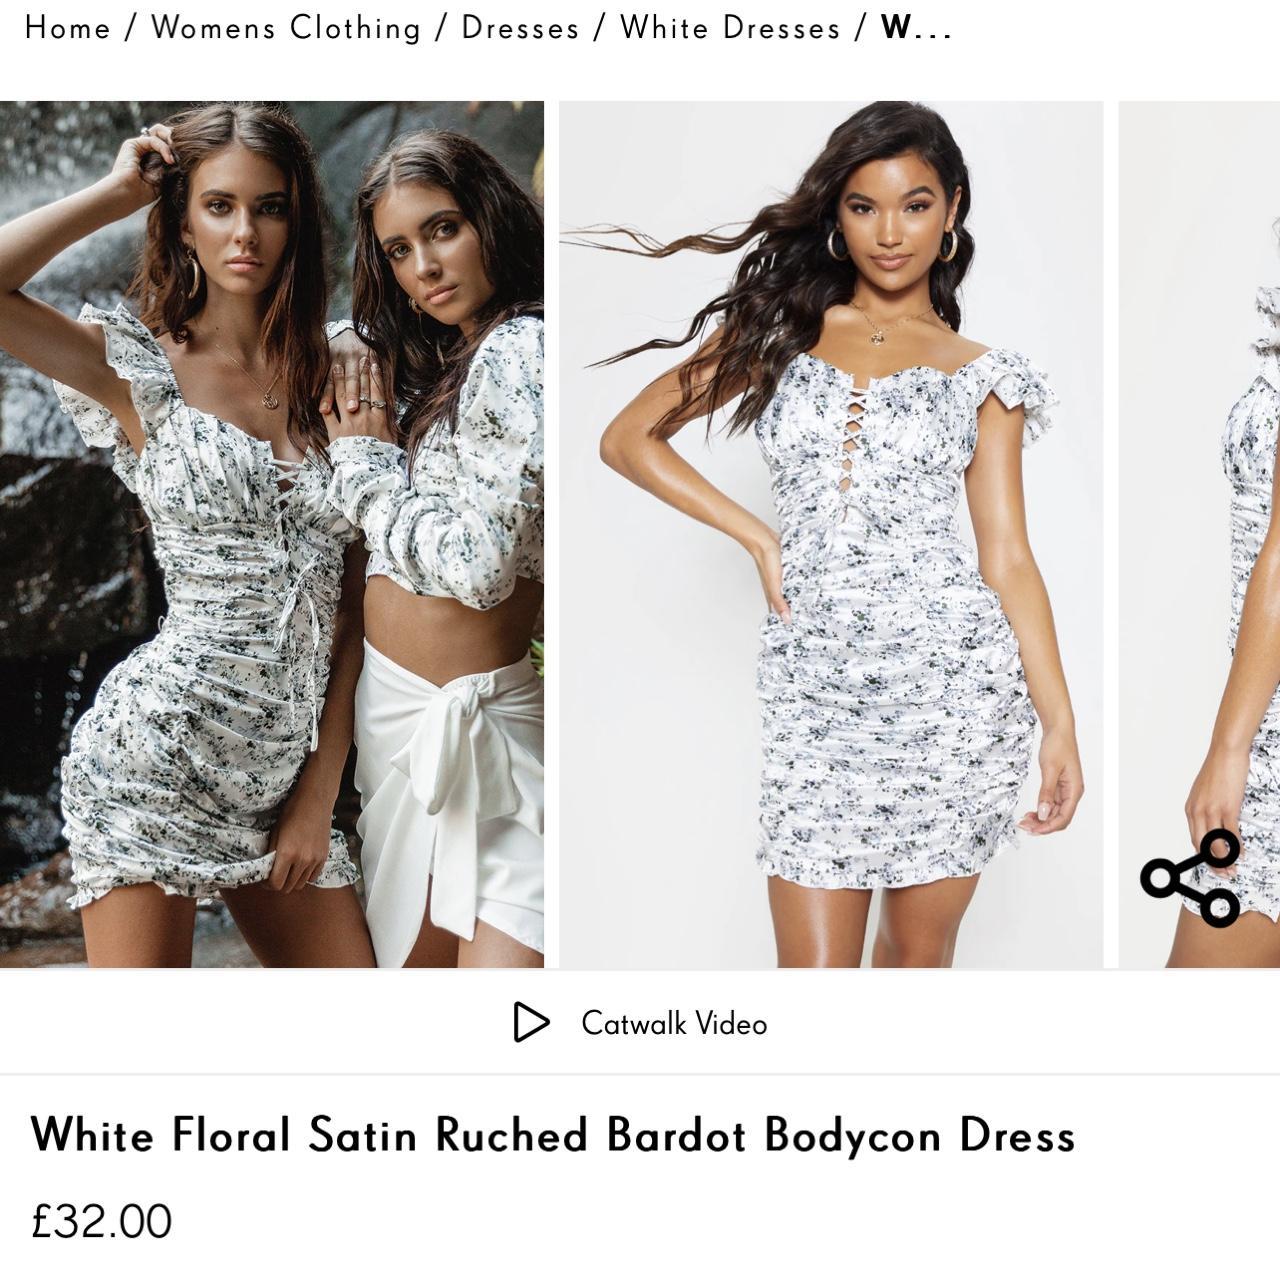 White Floral Satin Ruched Bardot Bodycon Dress